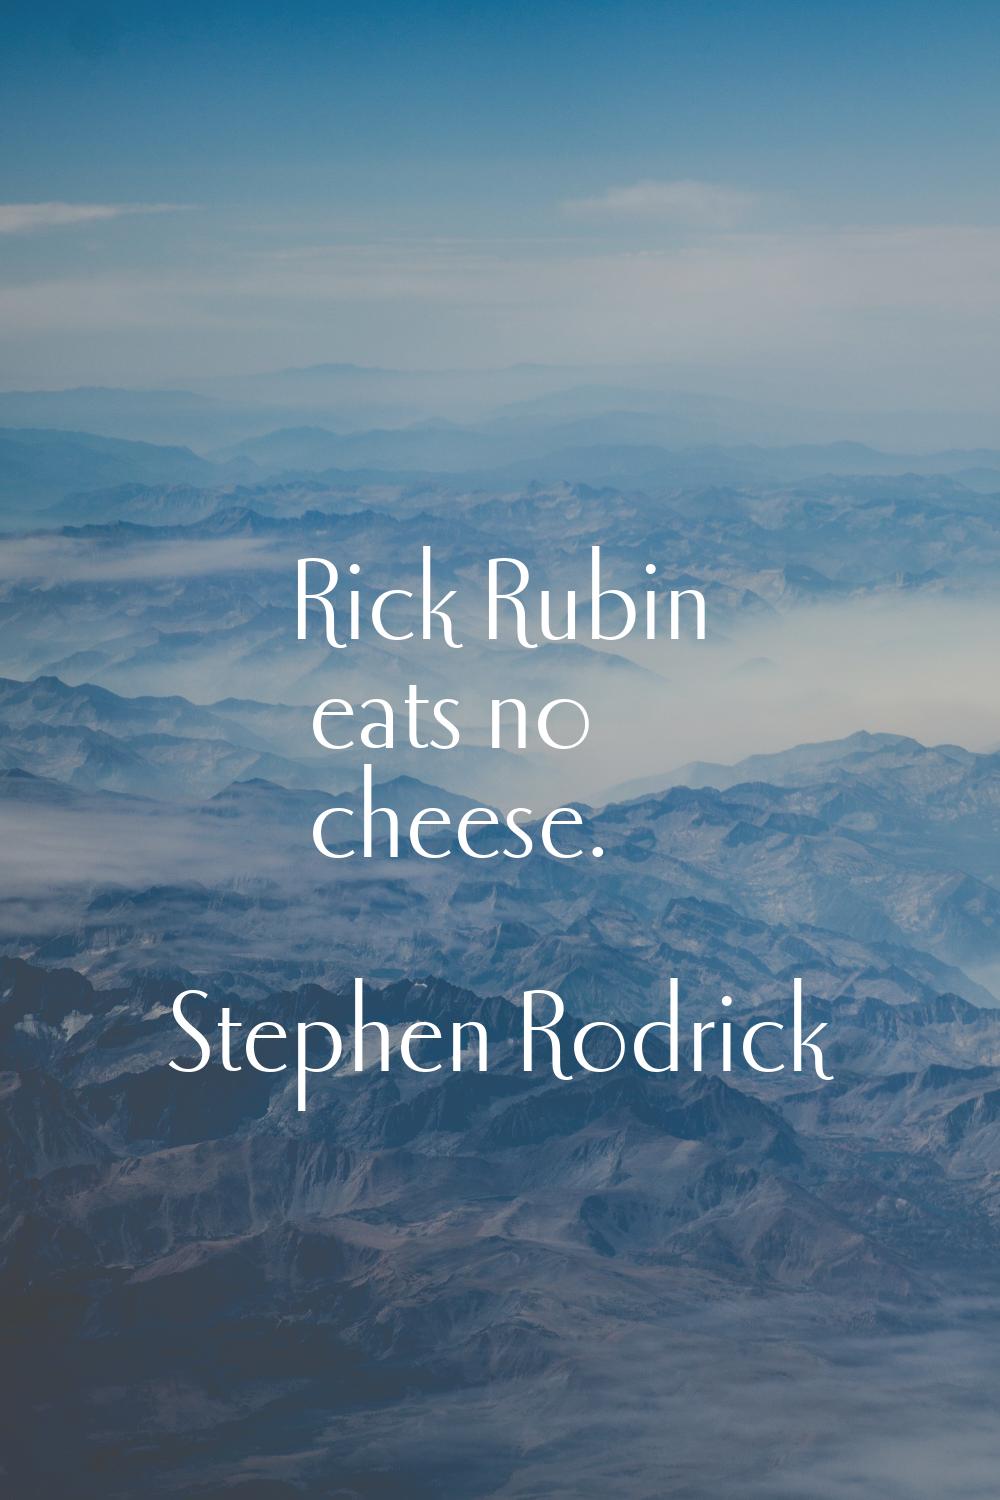 Rick Rubin eats no cheese.